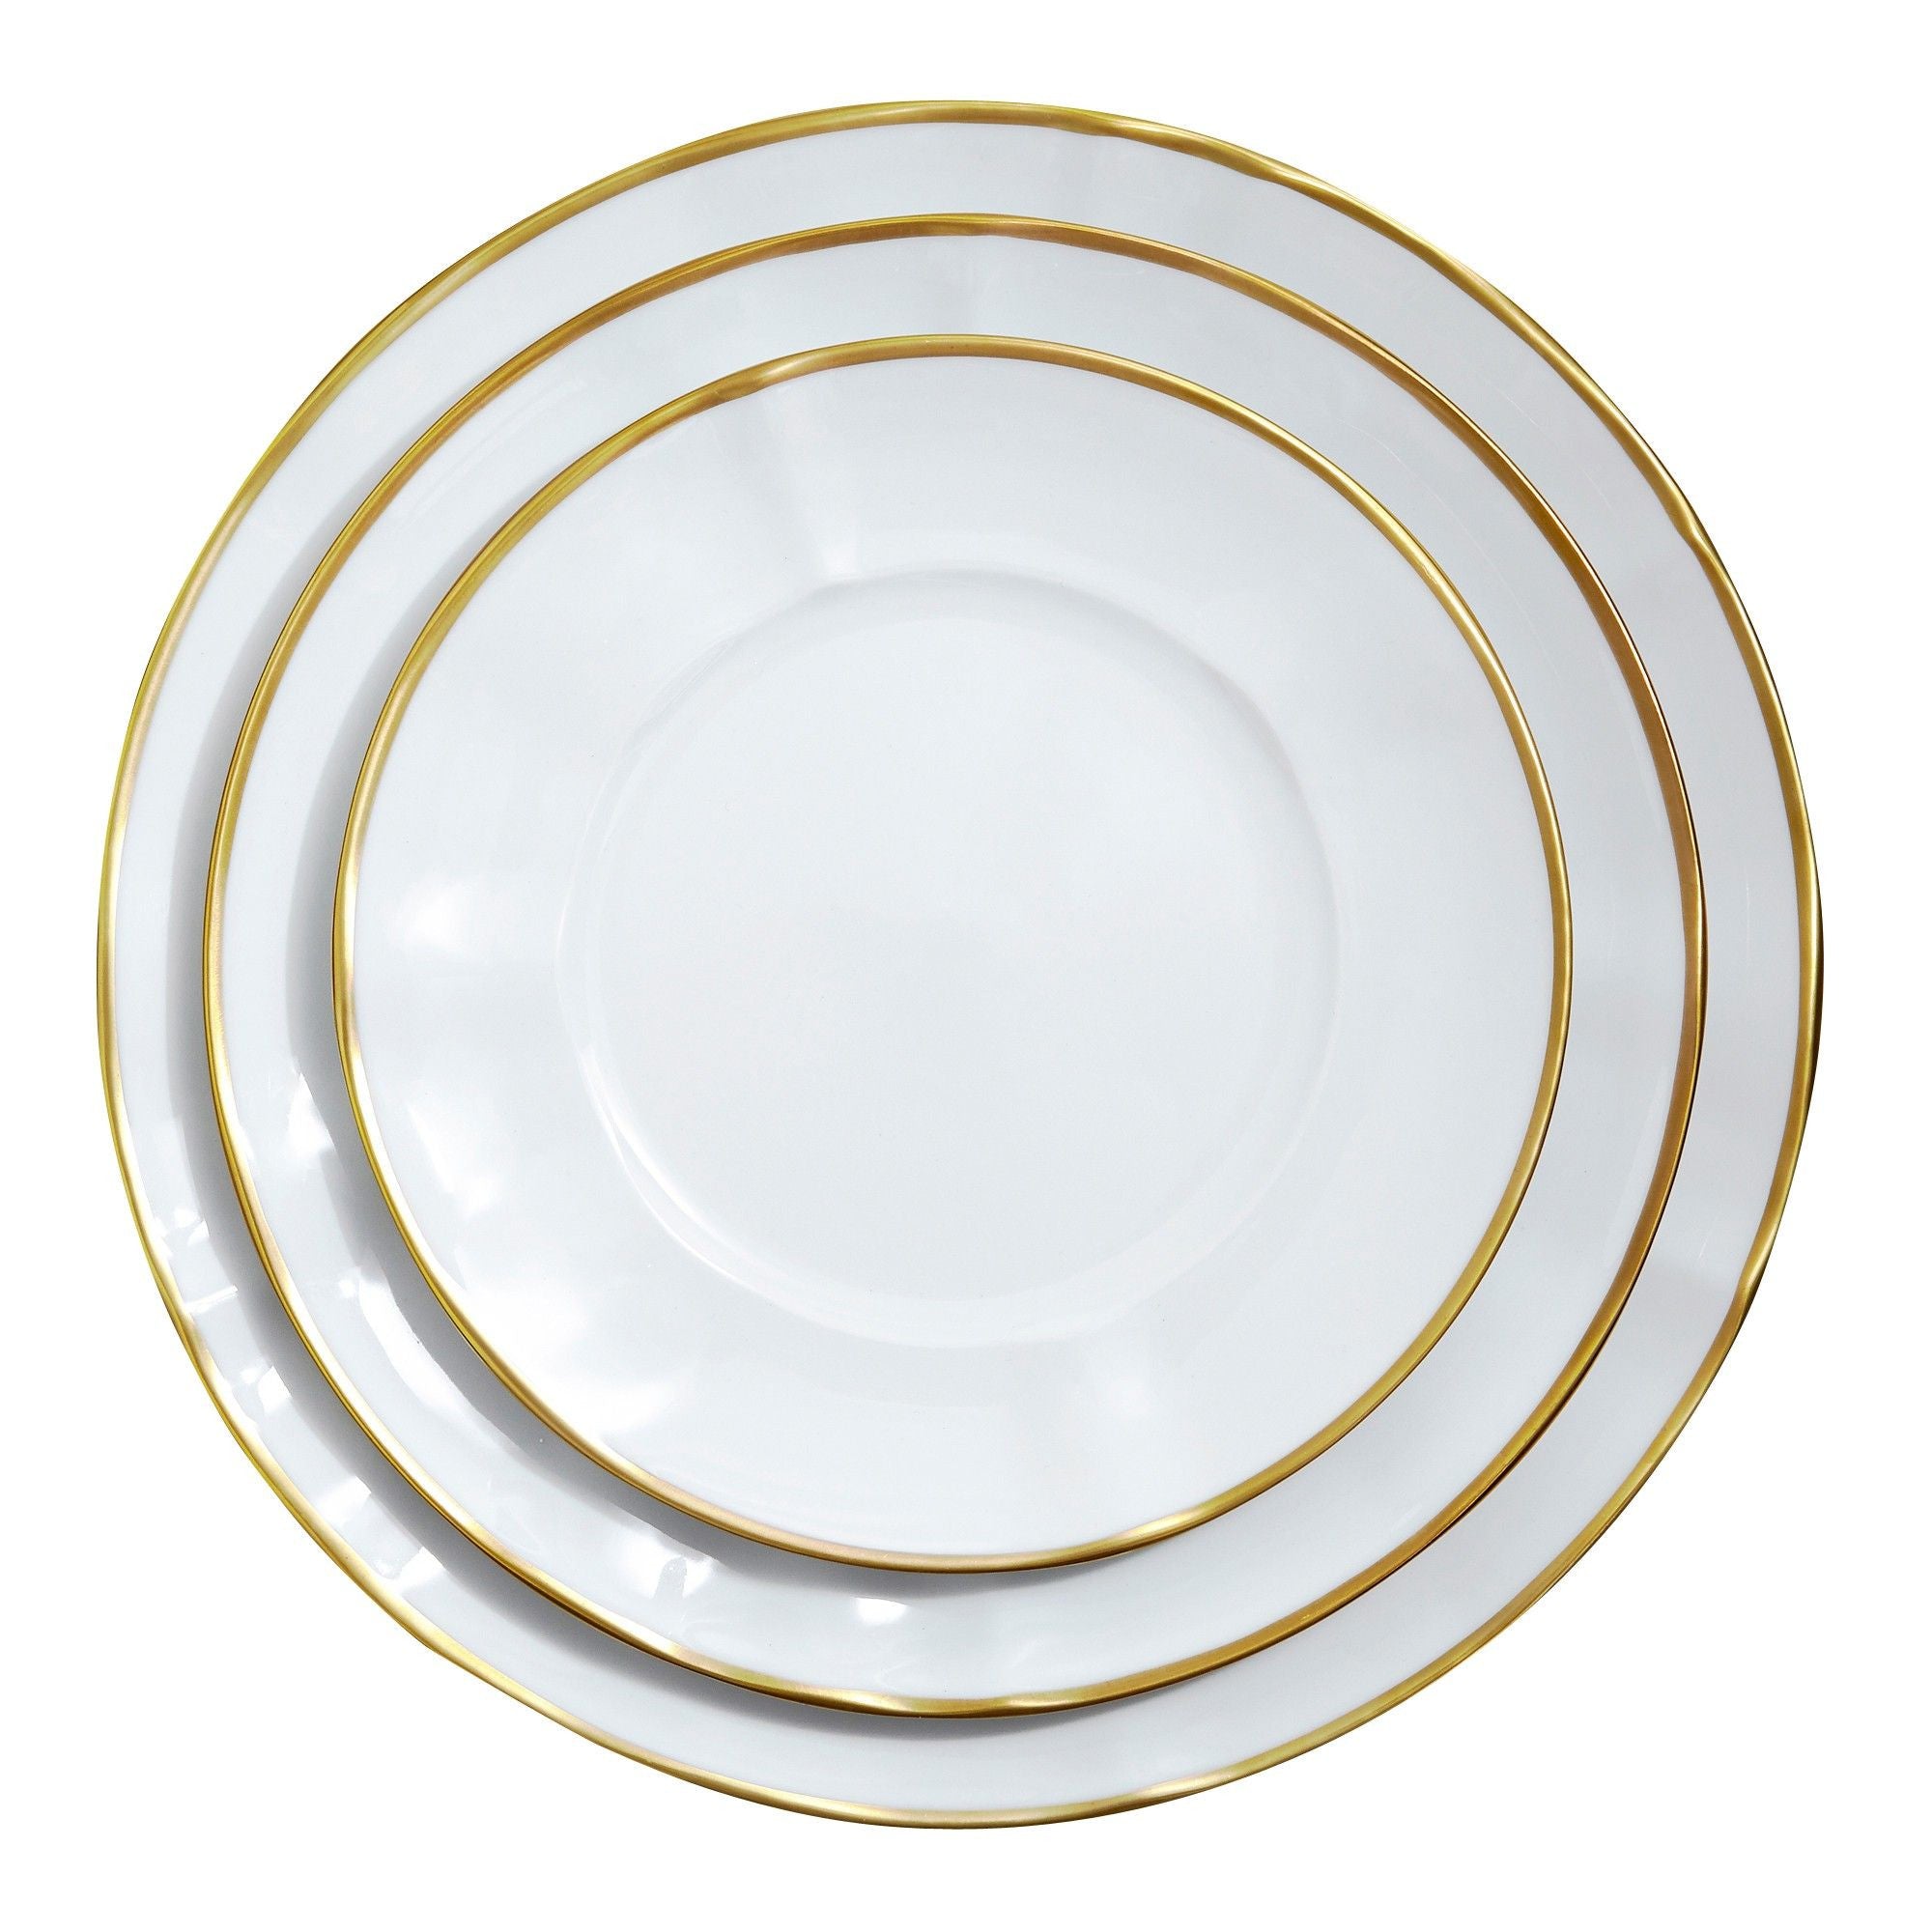 Simply Elegant Gold Salad Plate